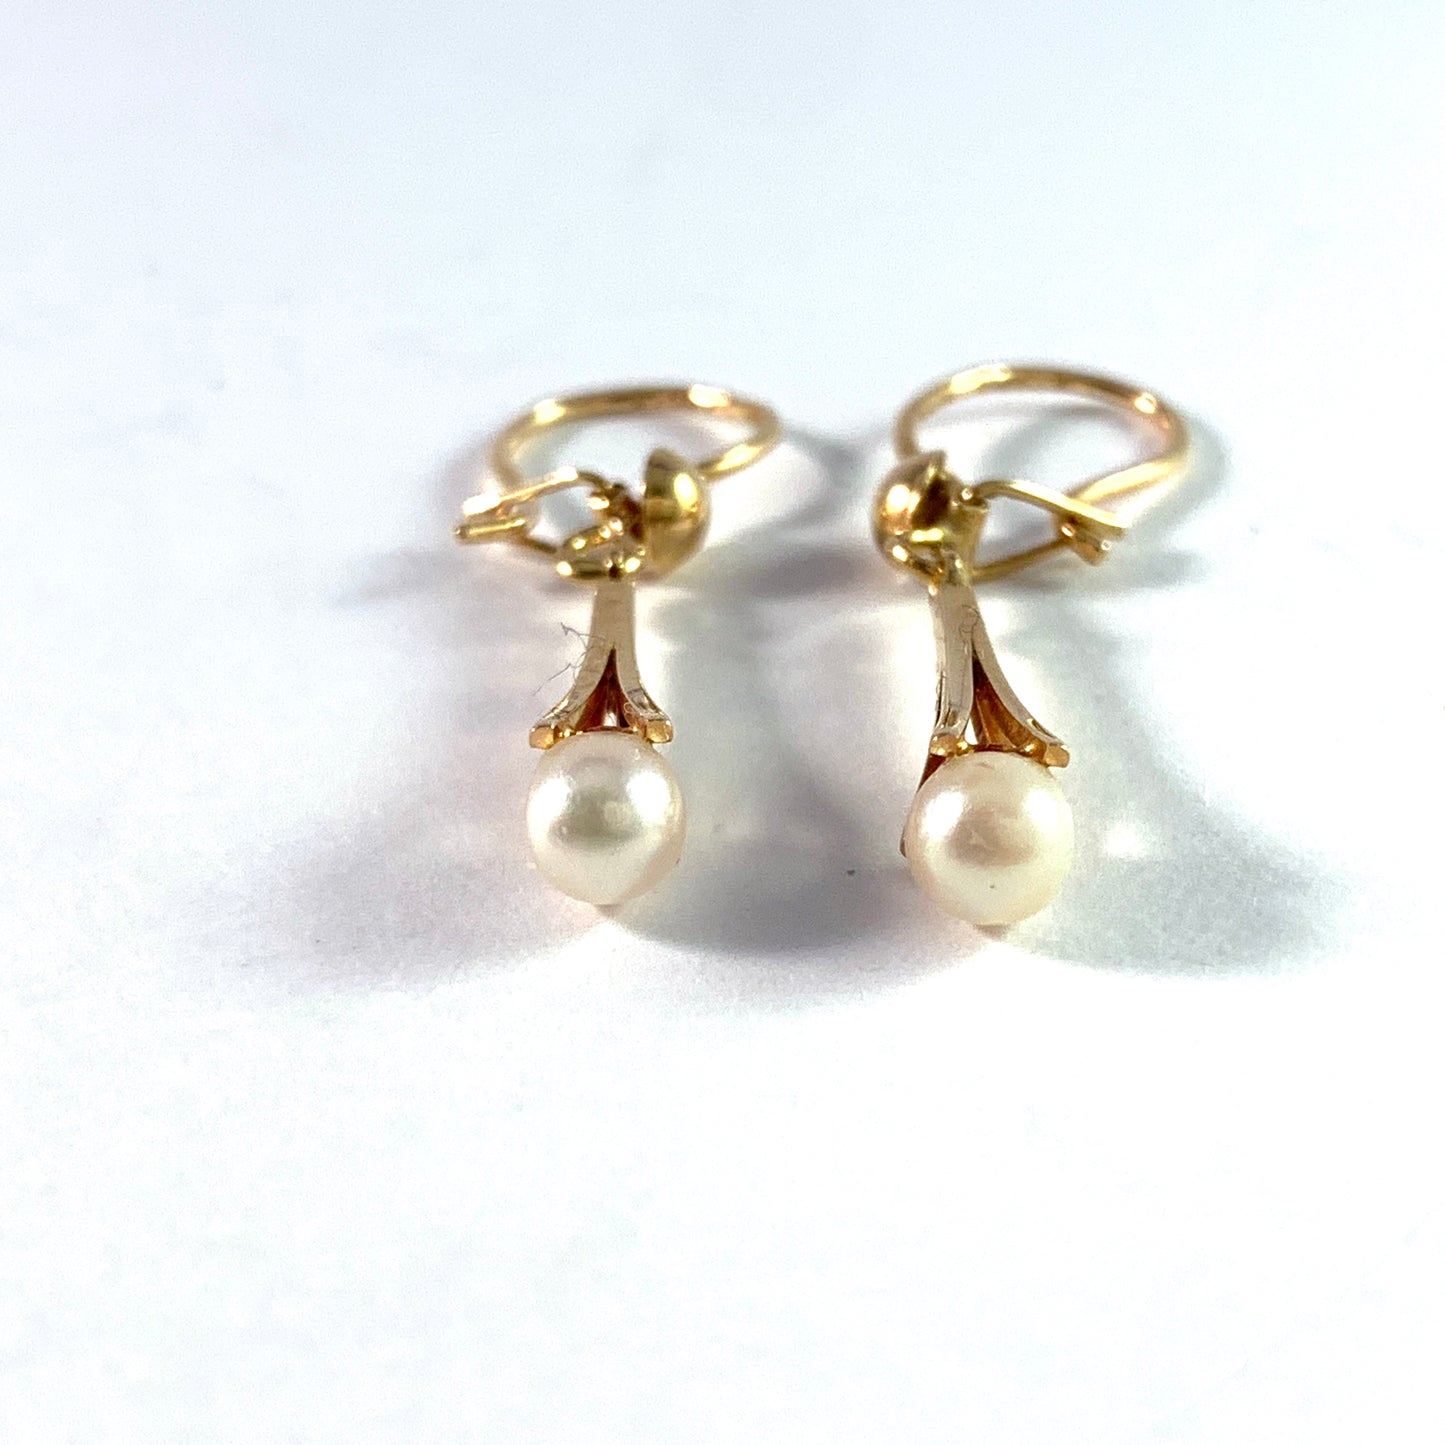 Opifors, Sweden 1960-70s. Vintage 18k Gold Cultured Pearl Earrings.